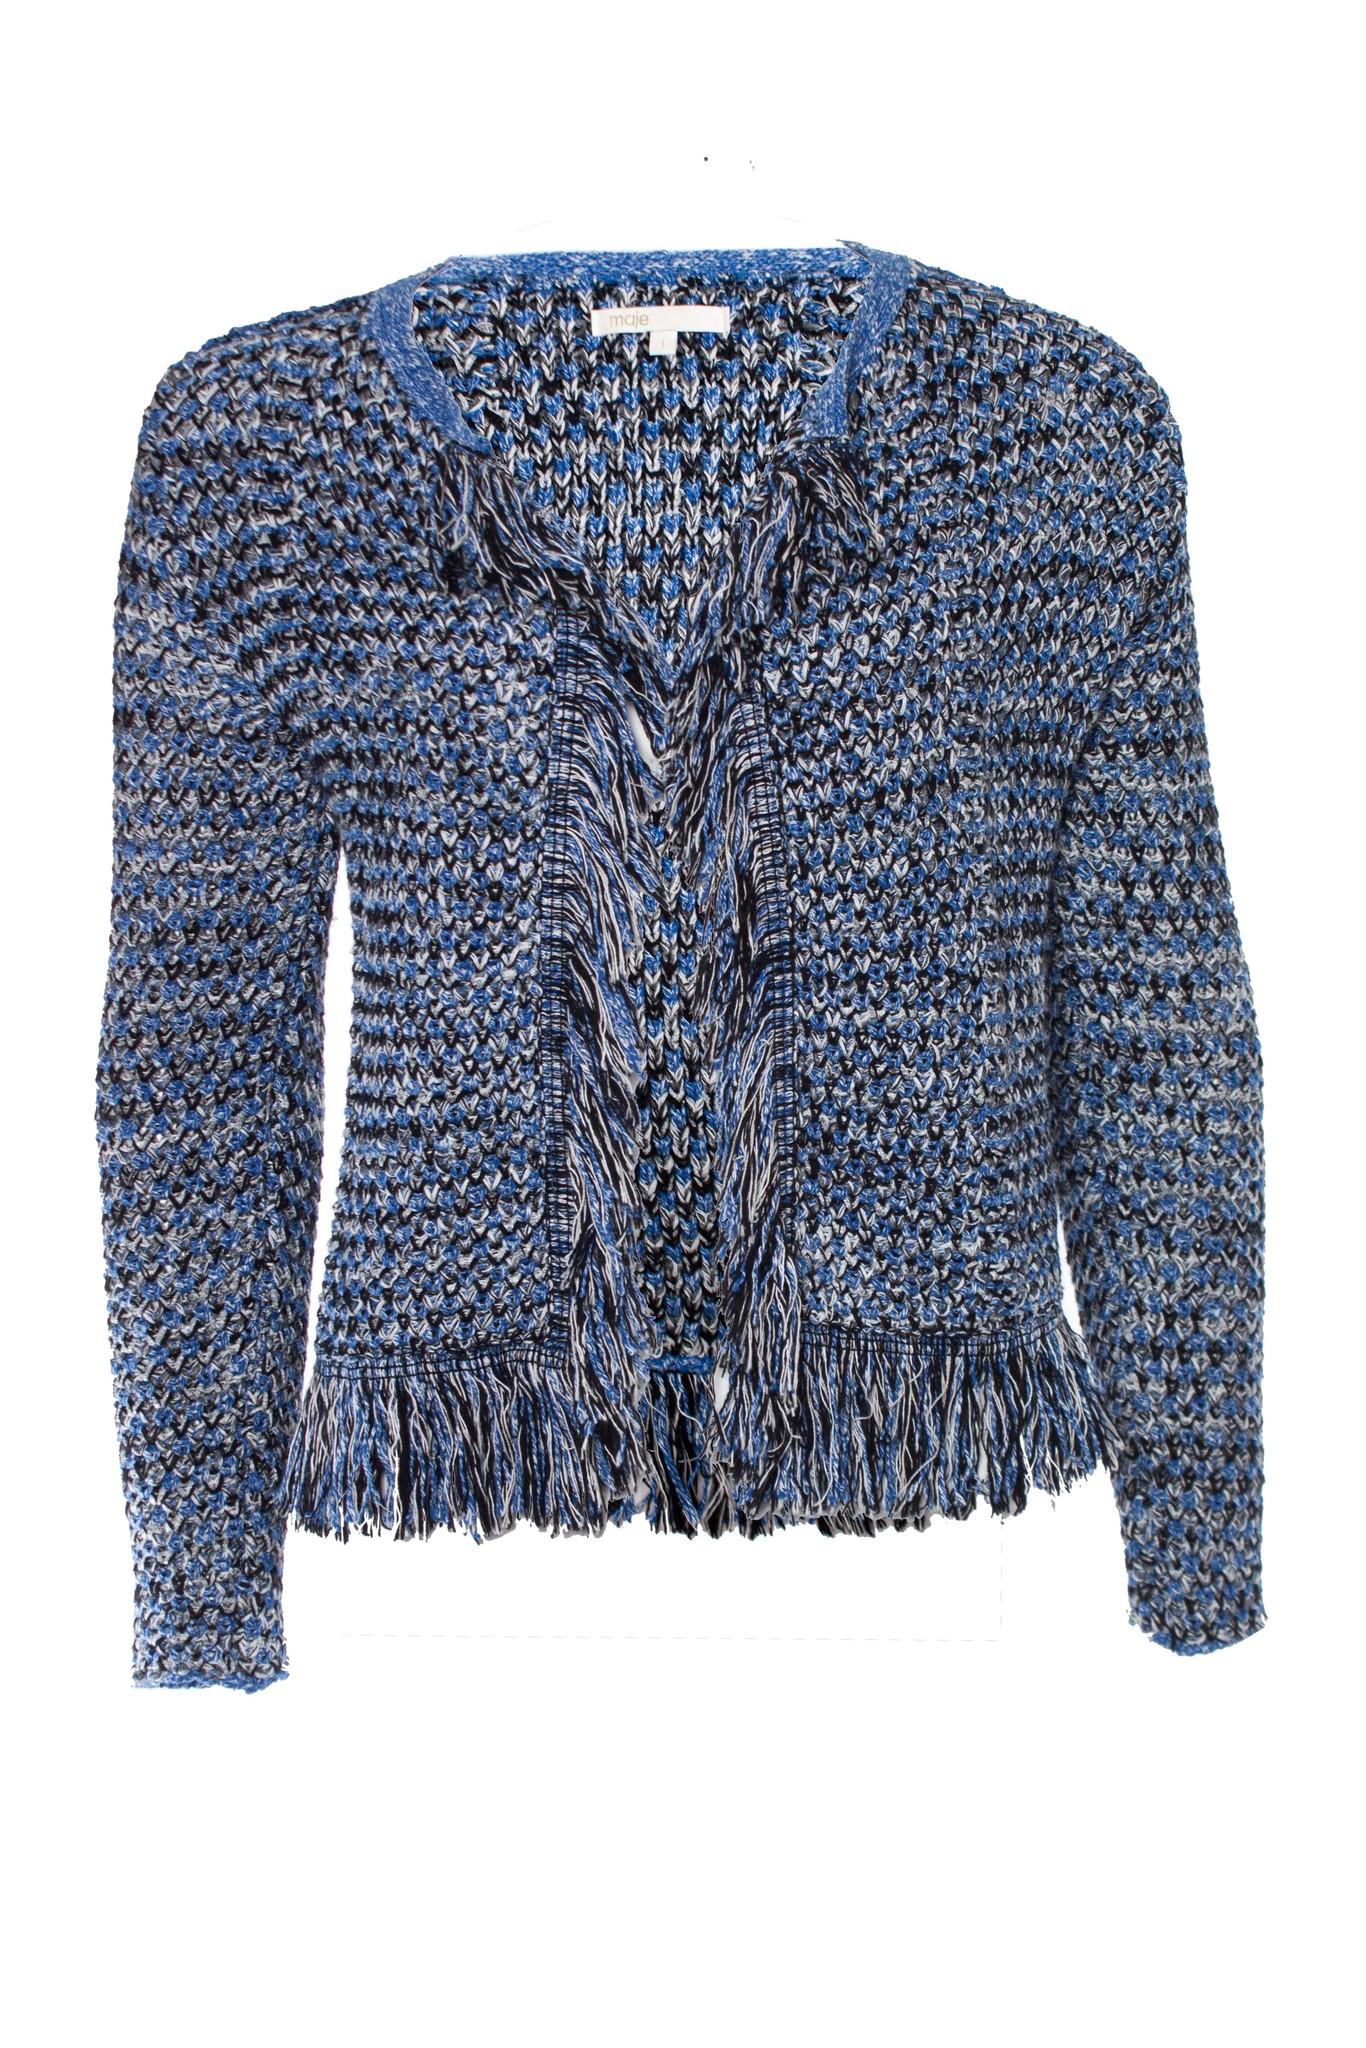 Maje, knitted fringe cardigan with lurex. - Unique Designer Pieces